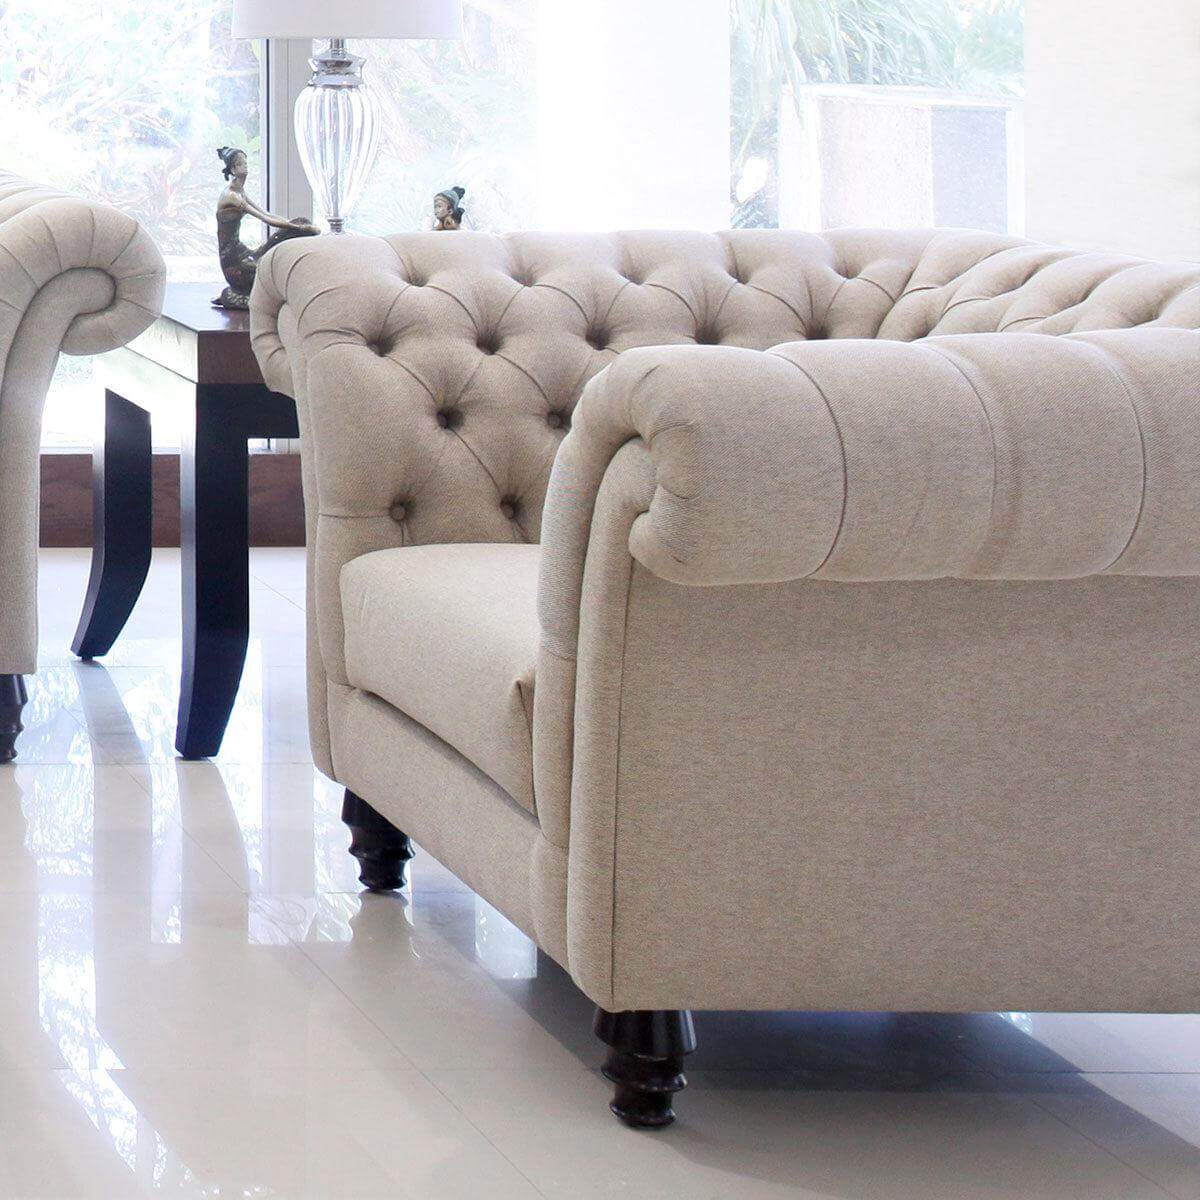 Savoy one seat sofa, unique and bold flair sofa furniture di indonesia